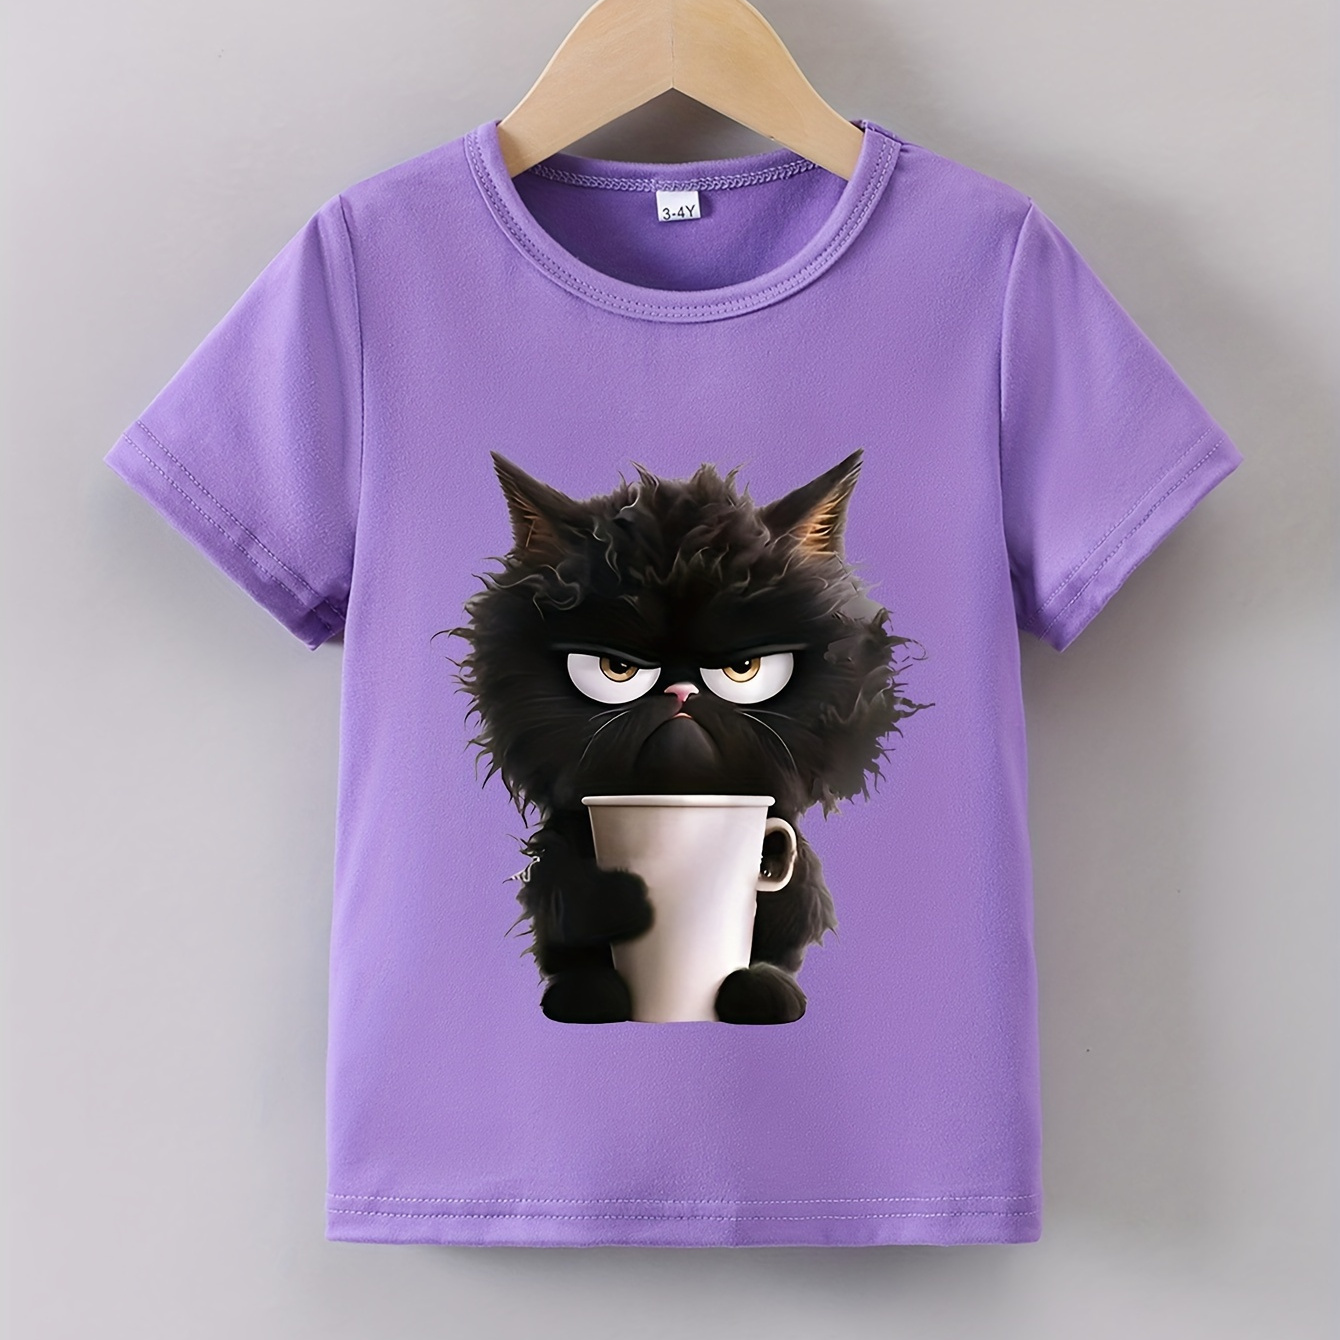 

Girls' Cartoon Angry Cat Graphic Print T-shirt, Casual Soft & Elastic Crew Neck Short Sleeve Tee, Summer Top